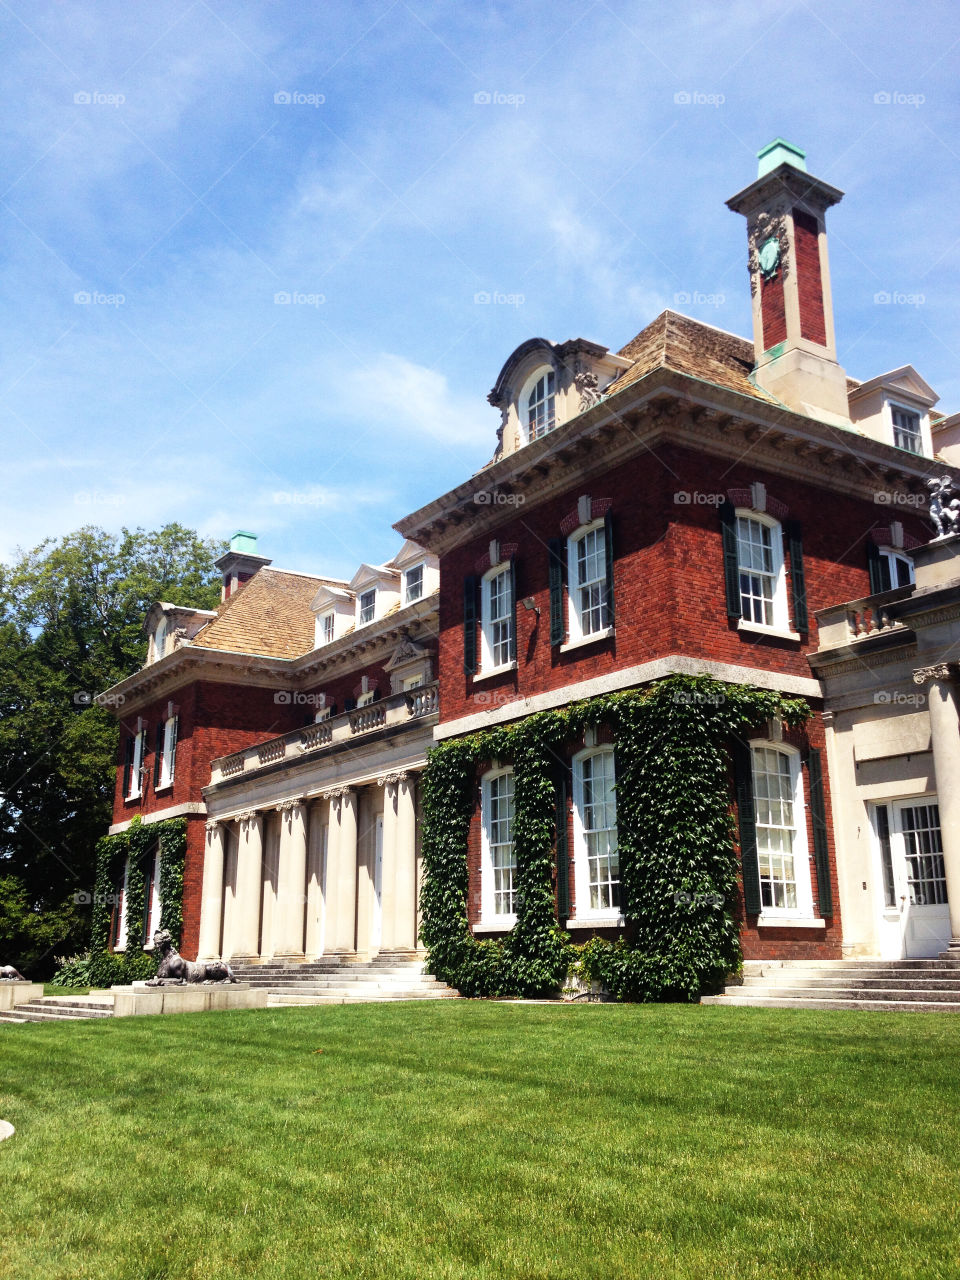 Old Westbury Gardens manor,
Old Westbury, Long Island, New York